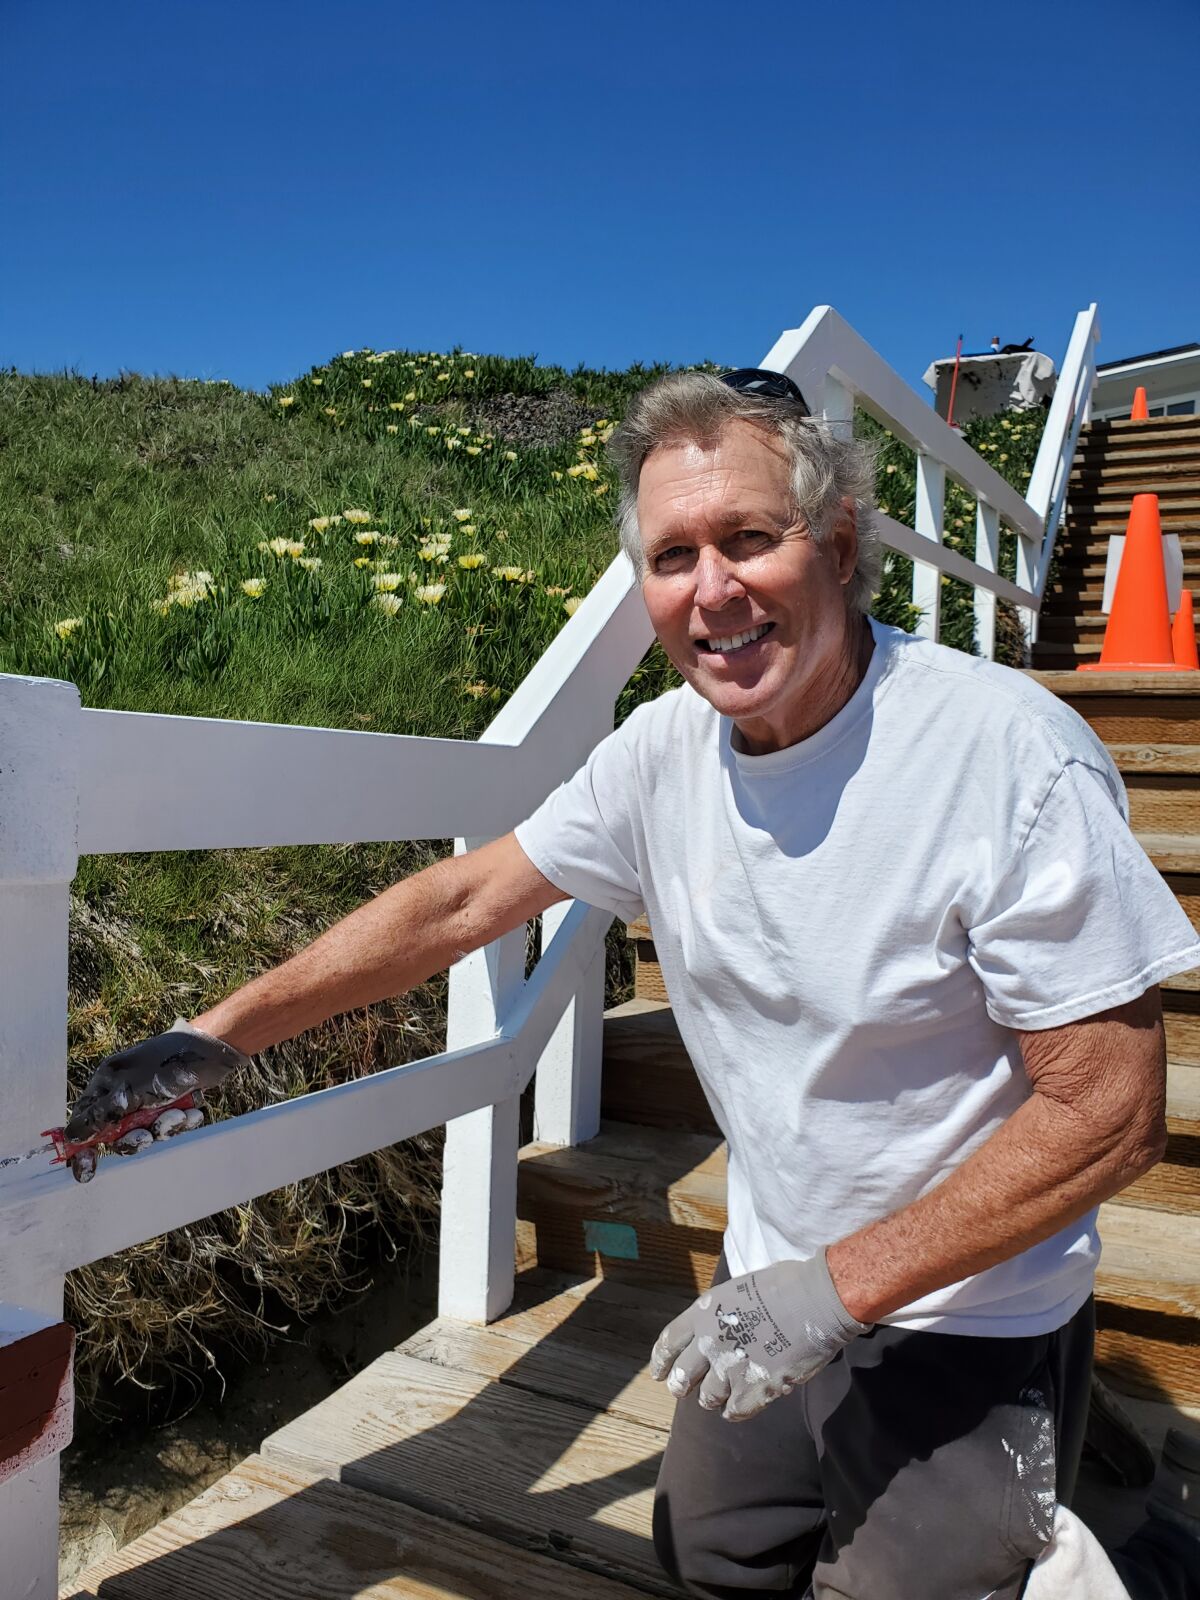 La Jolla resident and city of San Diego volunteer Joseph McGoldrick paints a stairway railing in Windansea.